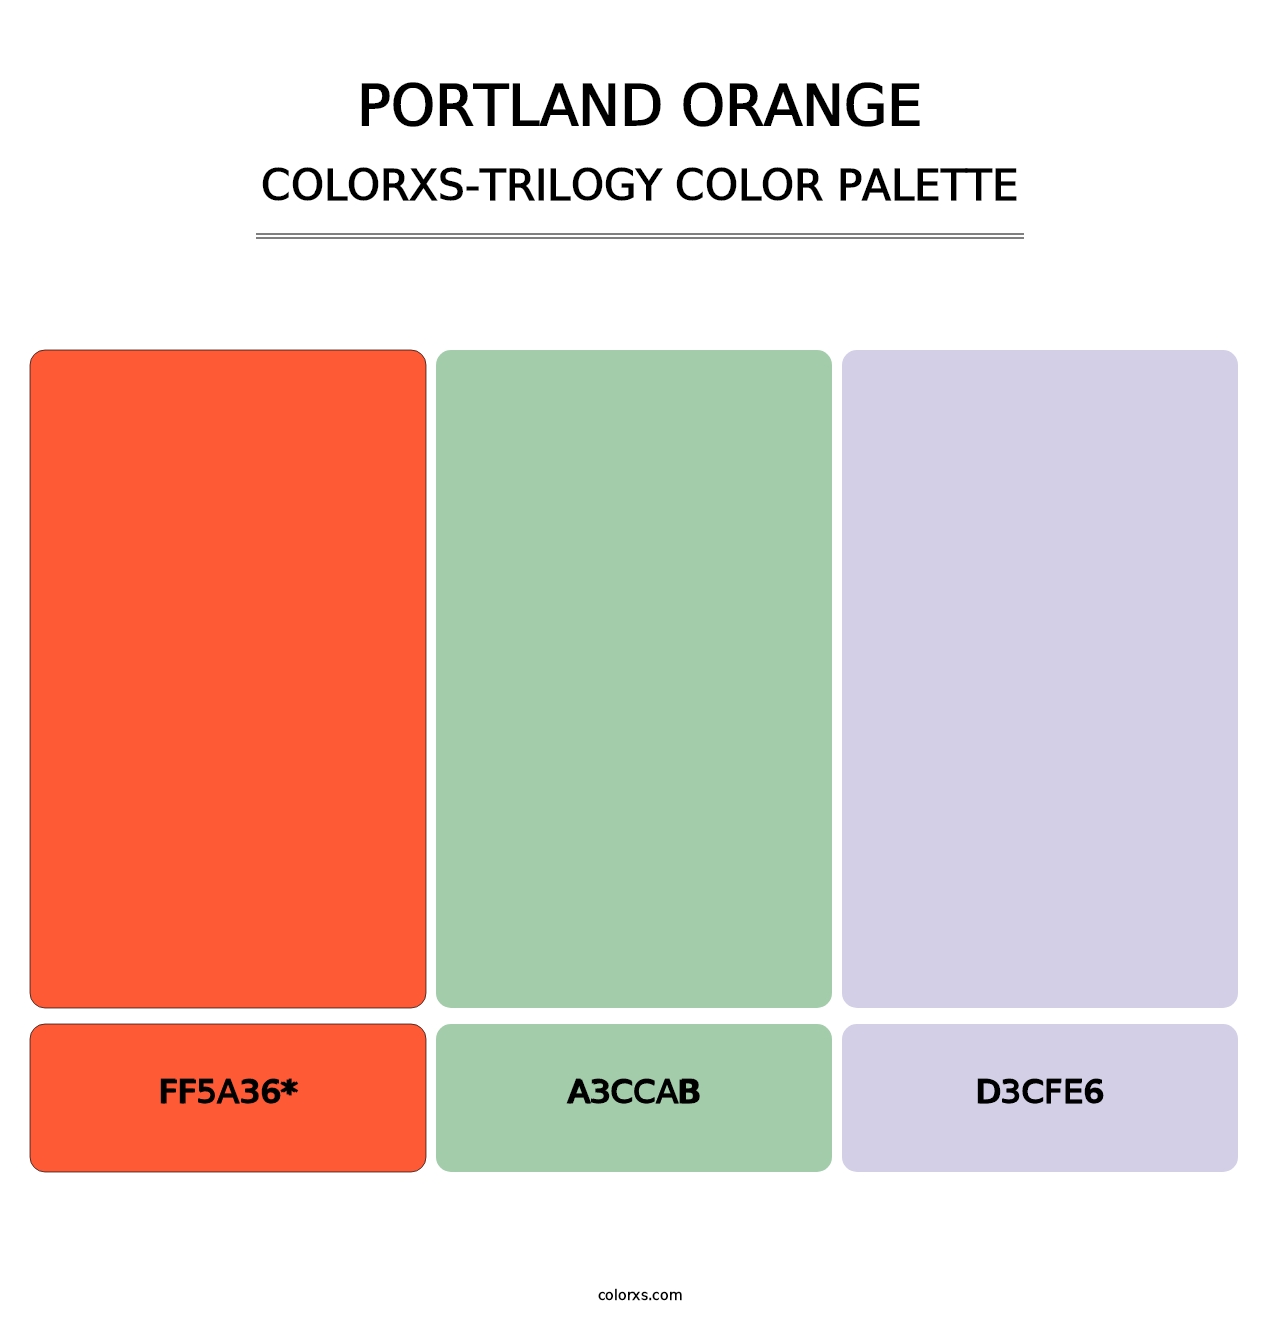 Portland Orange - Colorxs Trilogy Palette